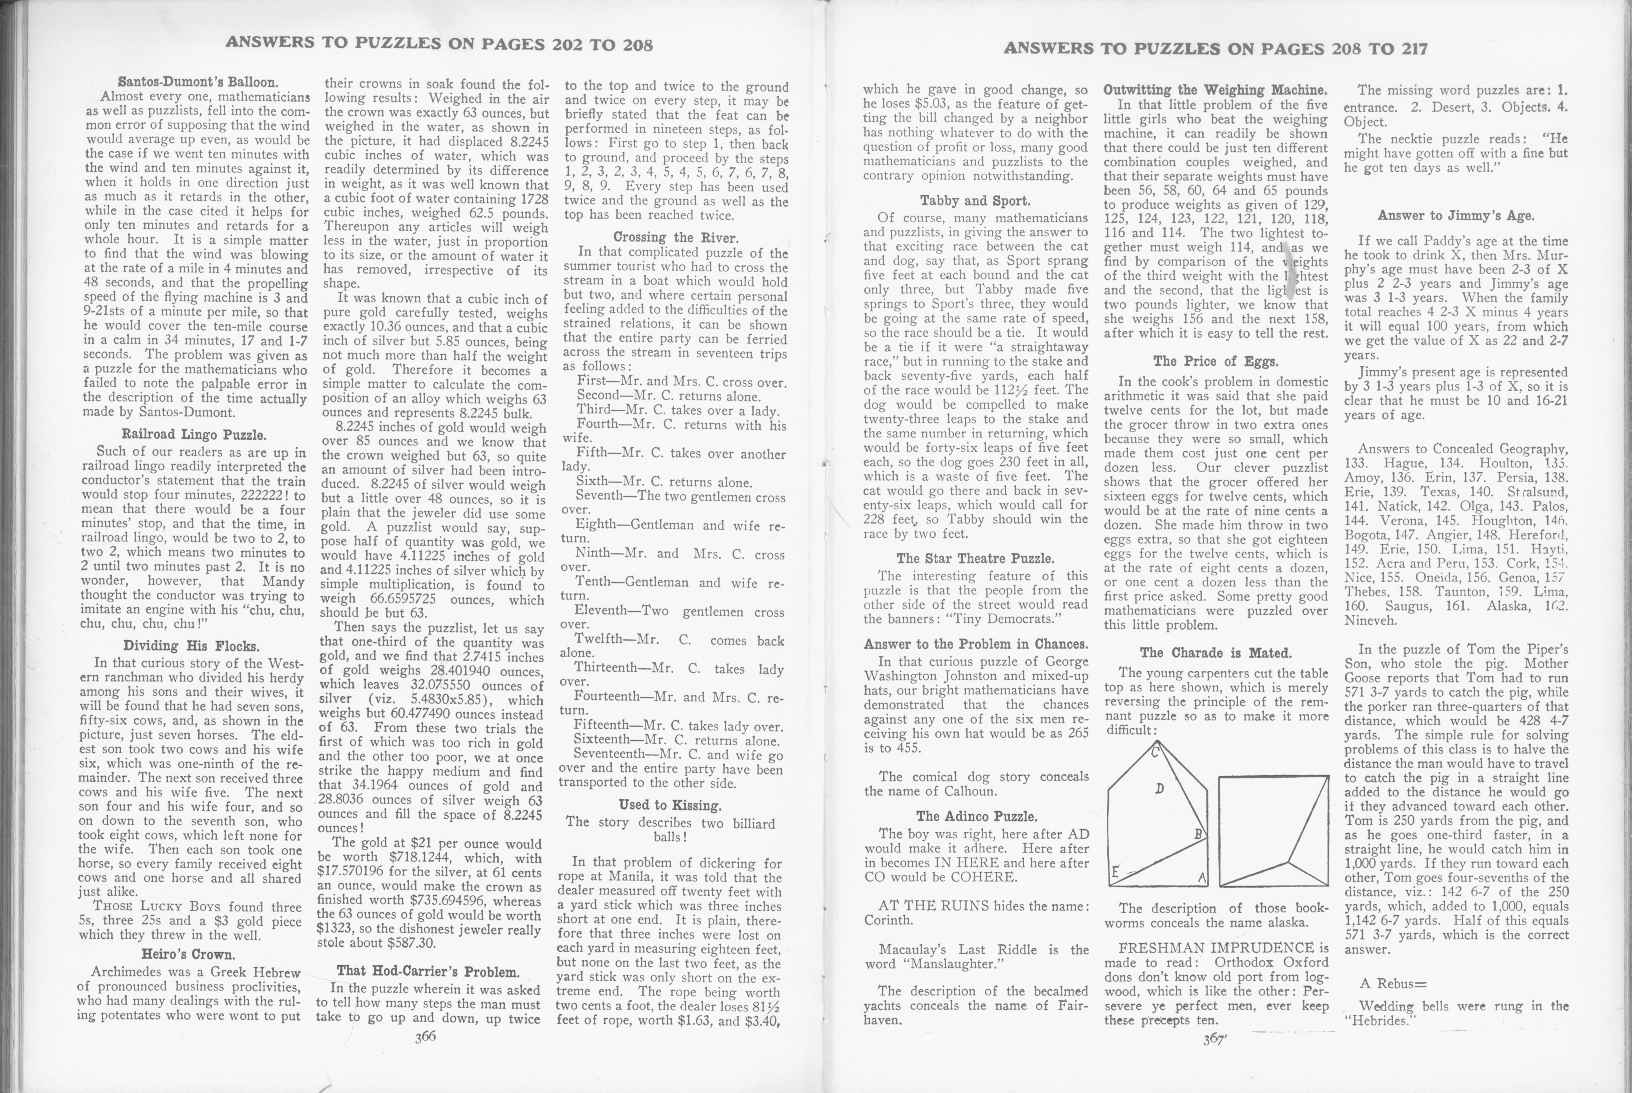 Sam Loyd - Cyclopedia of Puzzles - page 366-367